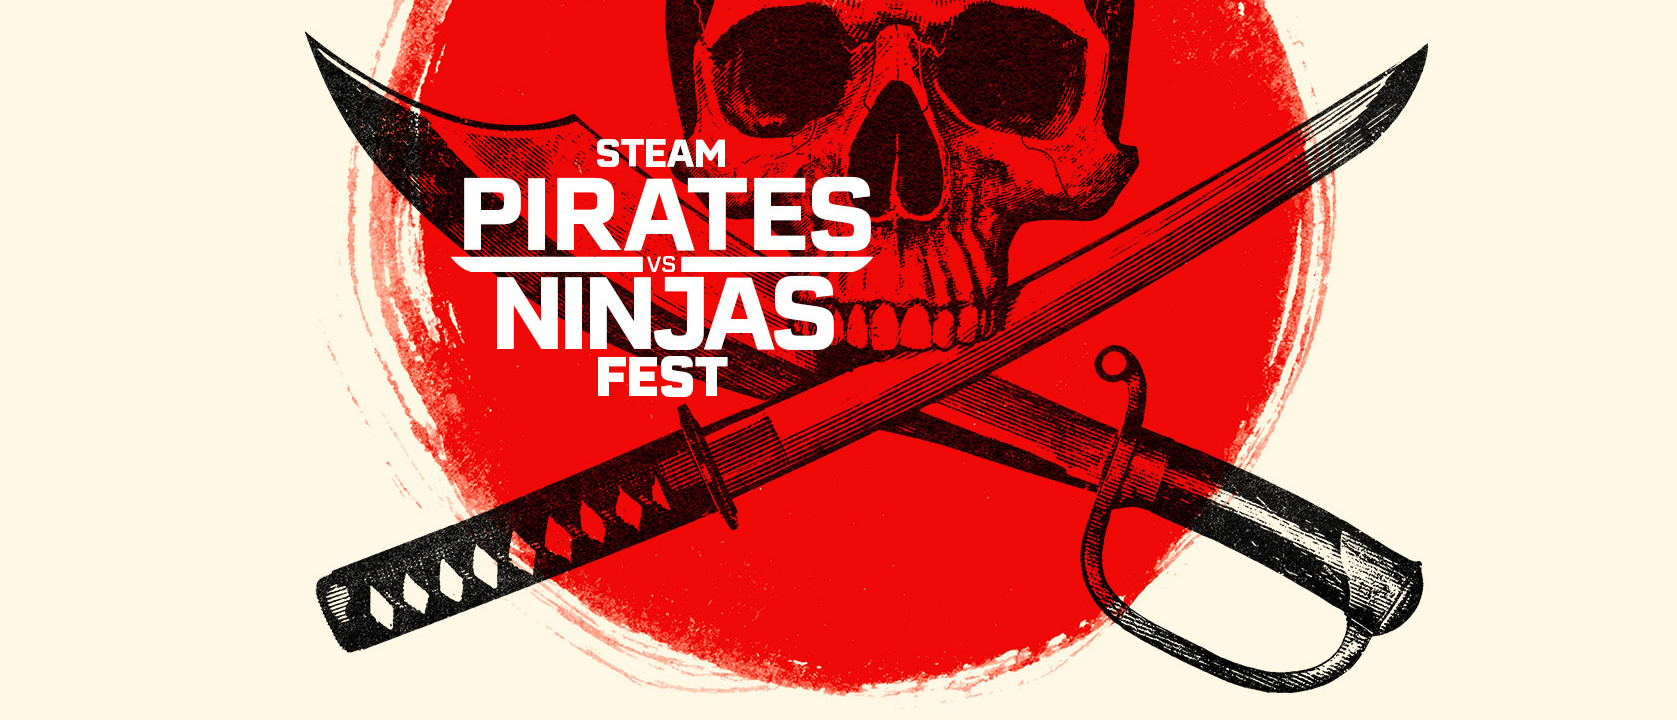 Pirates vs Ninjas Steam Sale